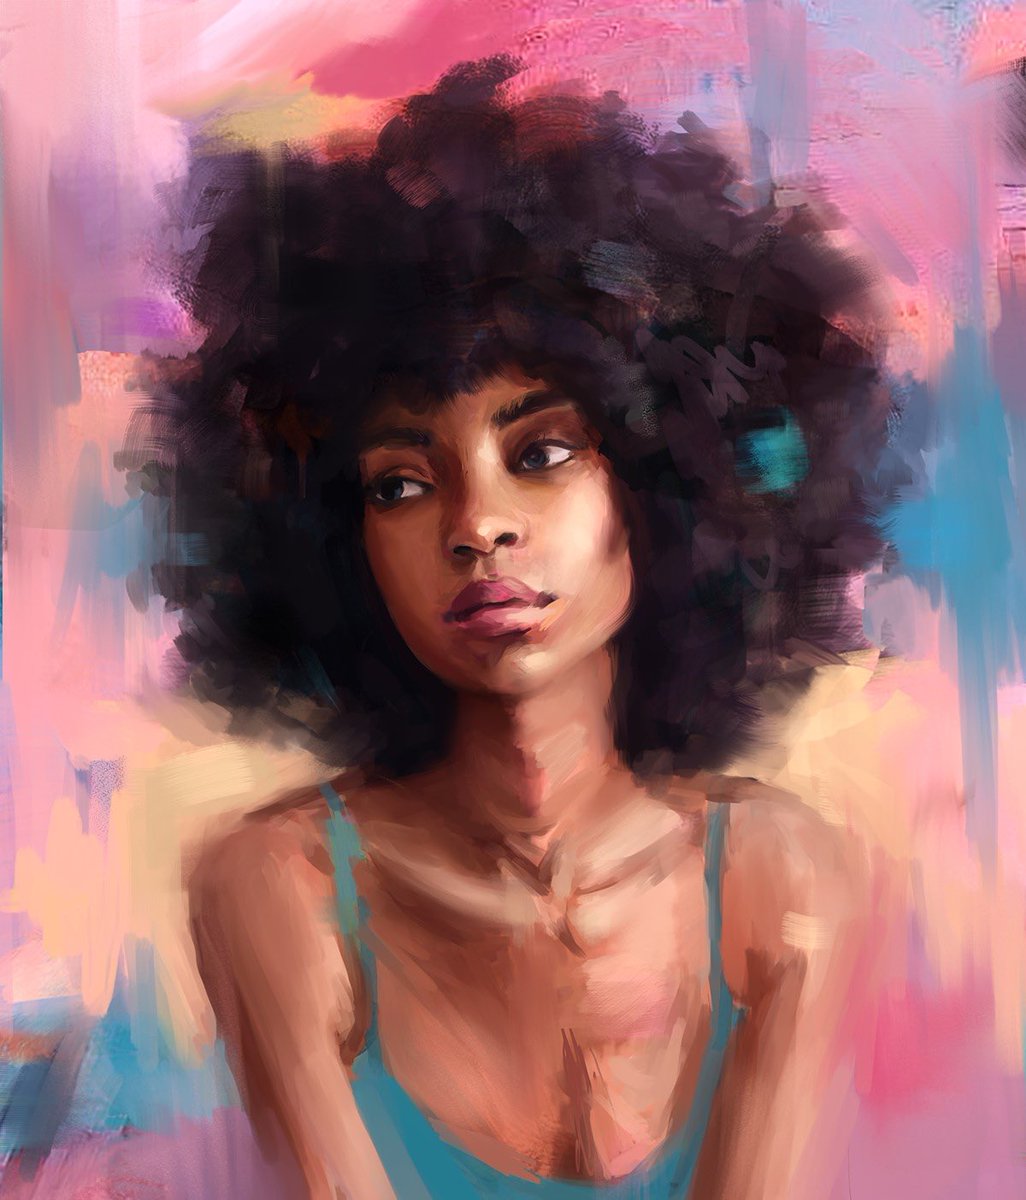 #drawingwhileblack 
#blackgirlmagic 
Hi! I’m Talia, a black artist in Baltimore. I’m new to twitter but I love drawing portraits and character!

Instagram: instagram.com/saphiraas